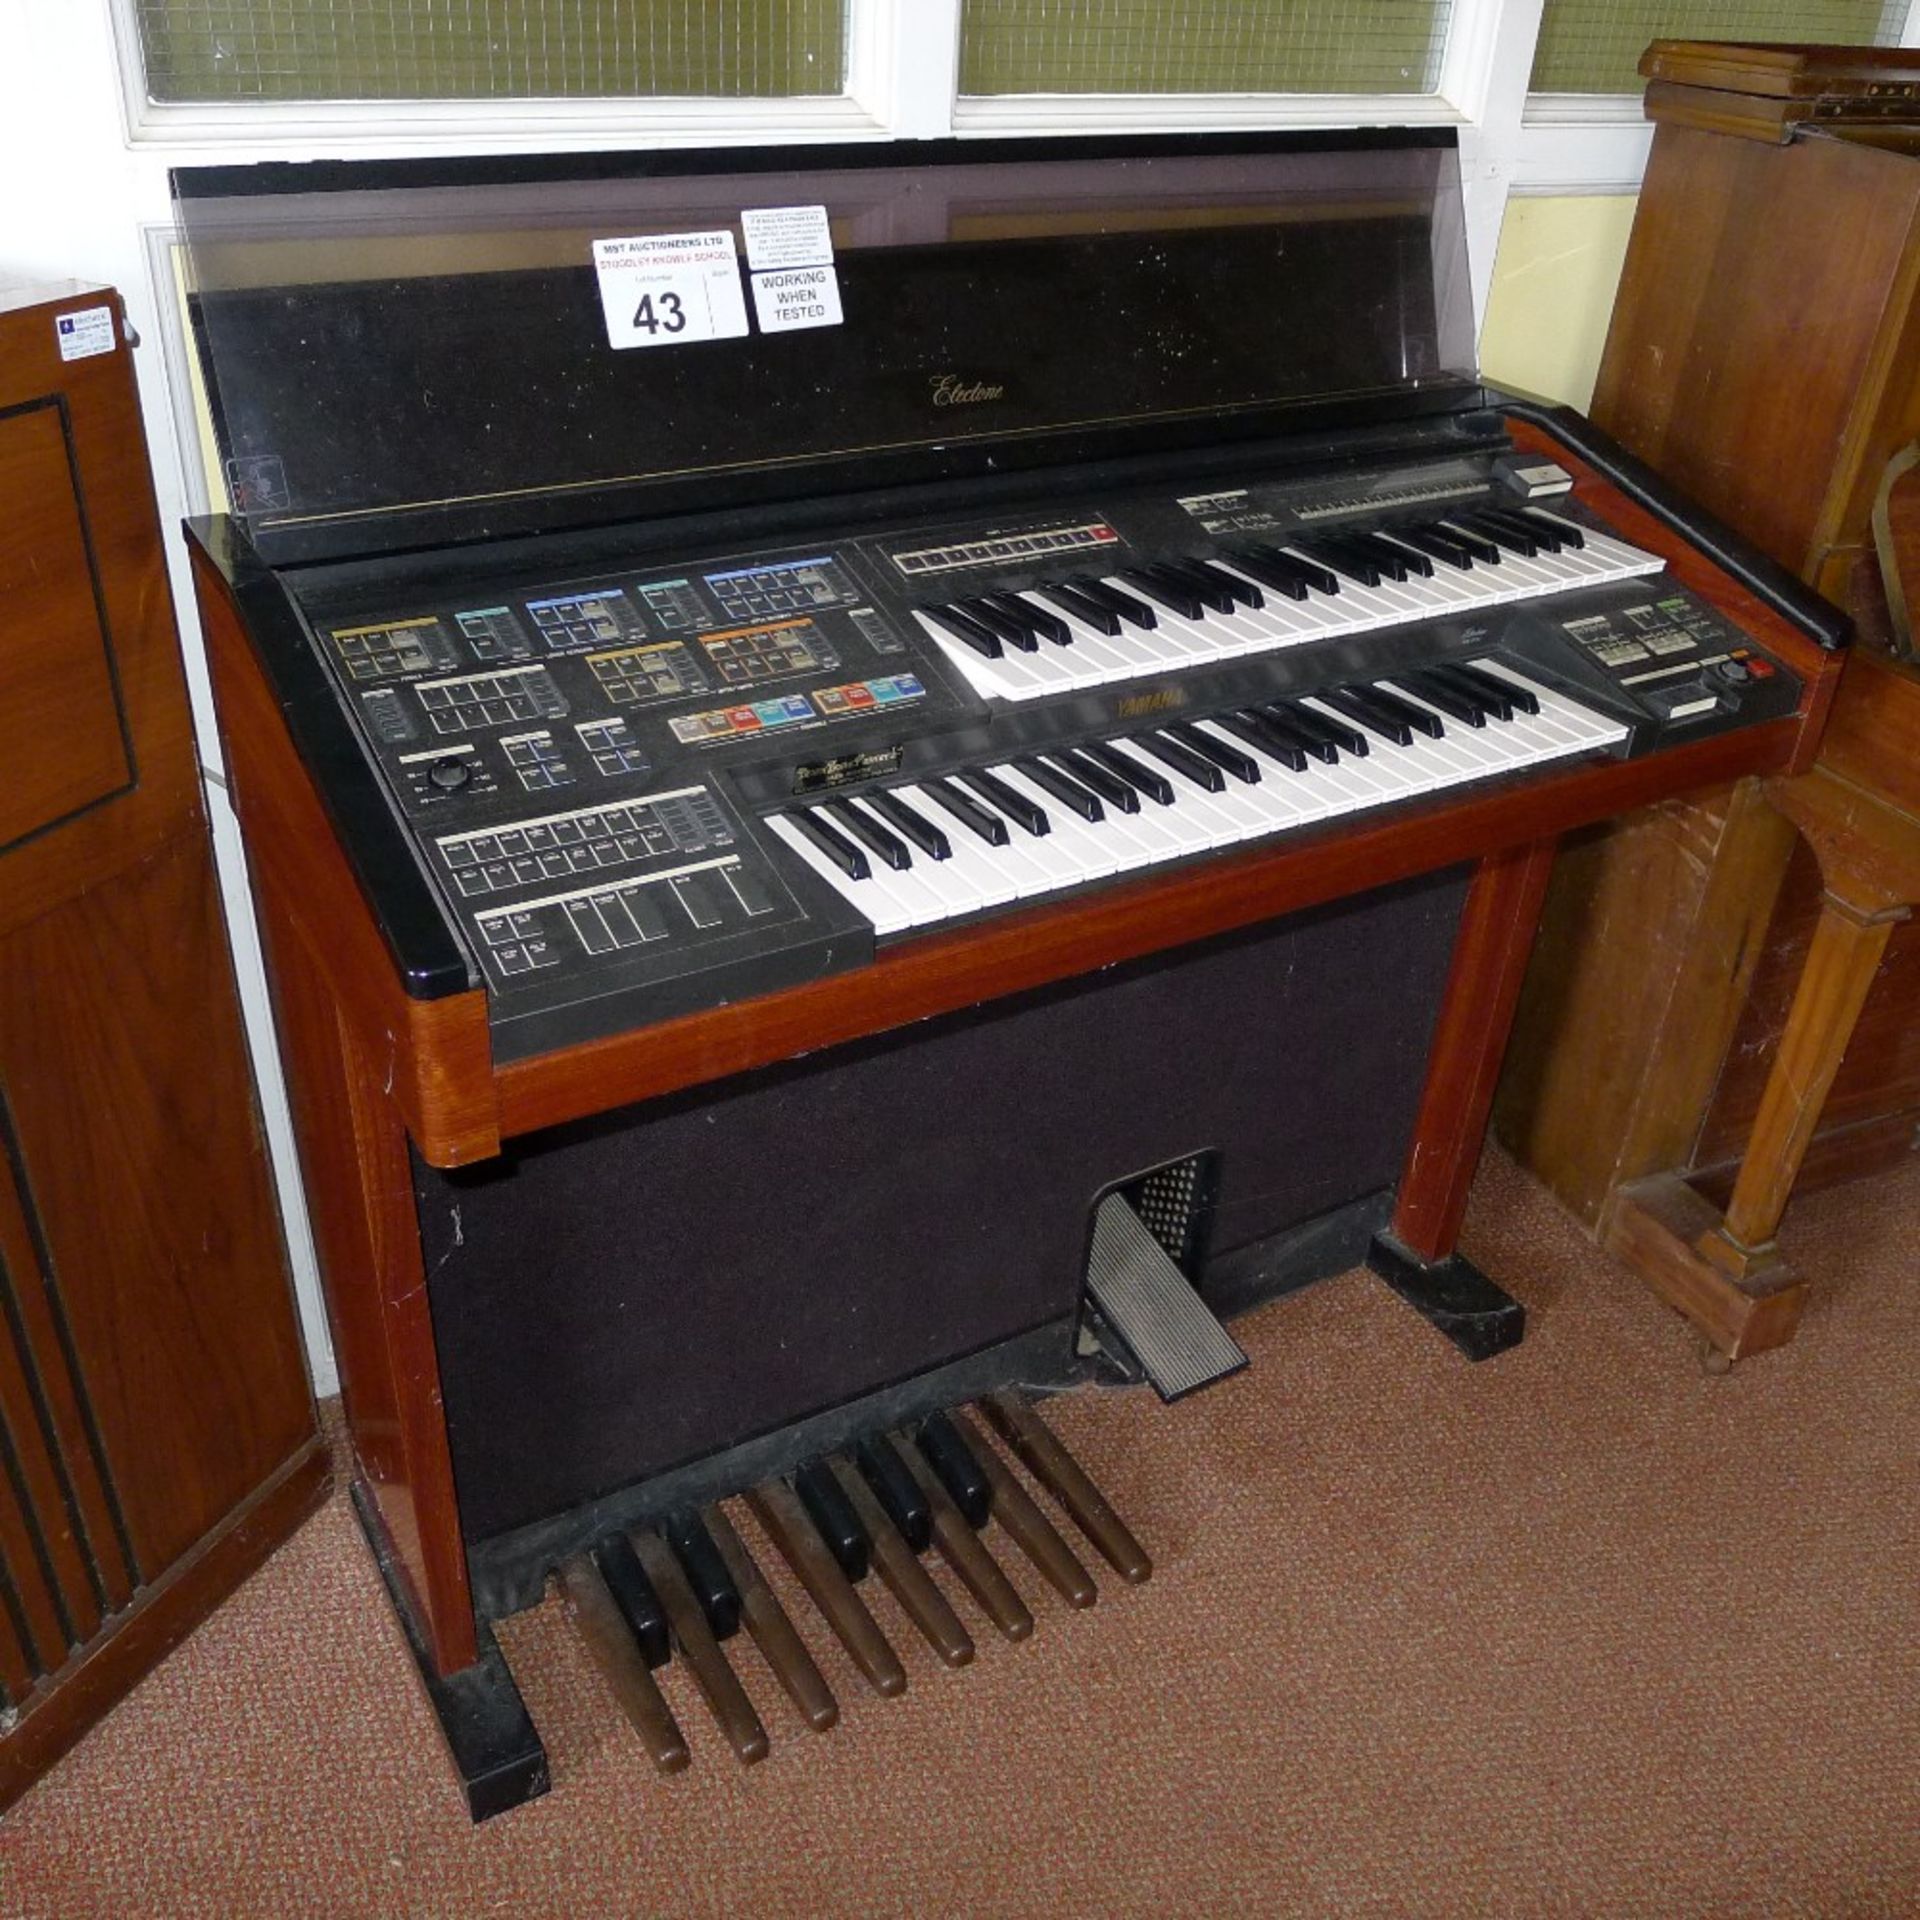 1 YAMAHA Electone MC-600 double keyboard electric organ (located in nursery area)